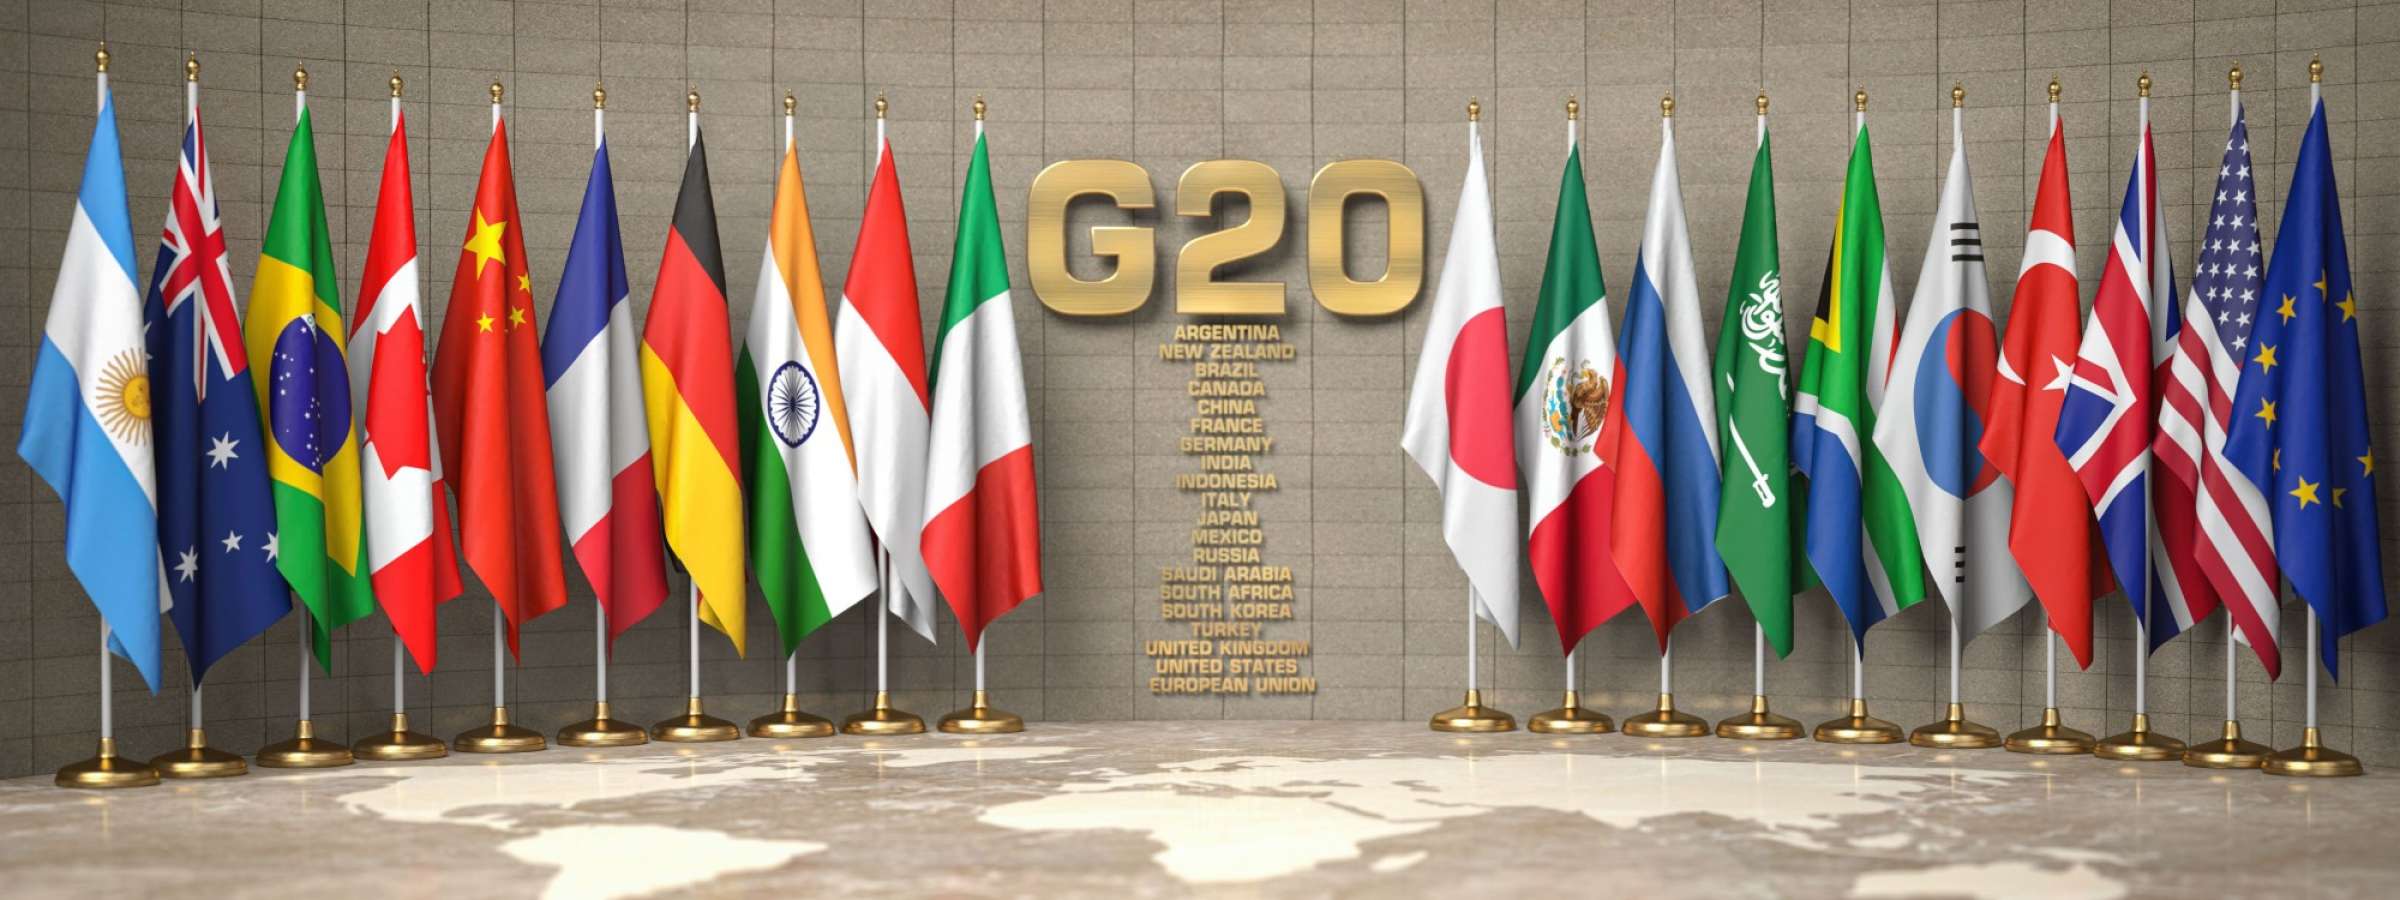 G20 flags